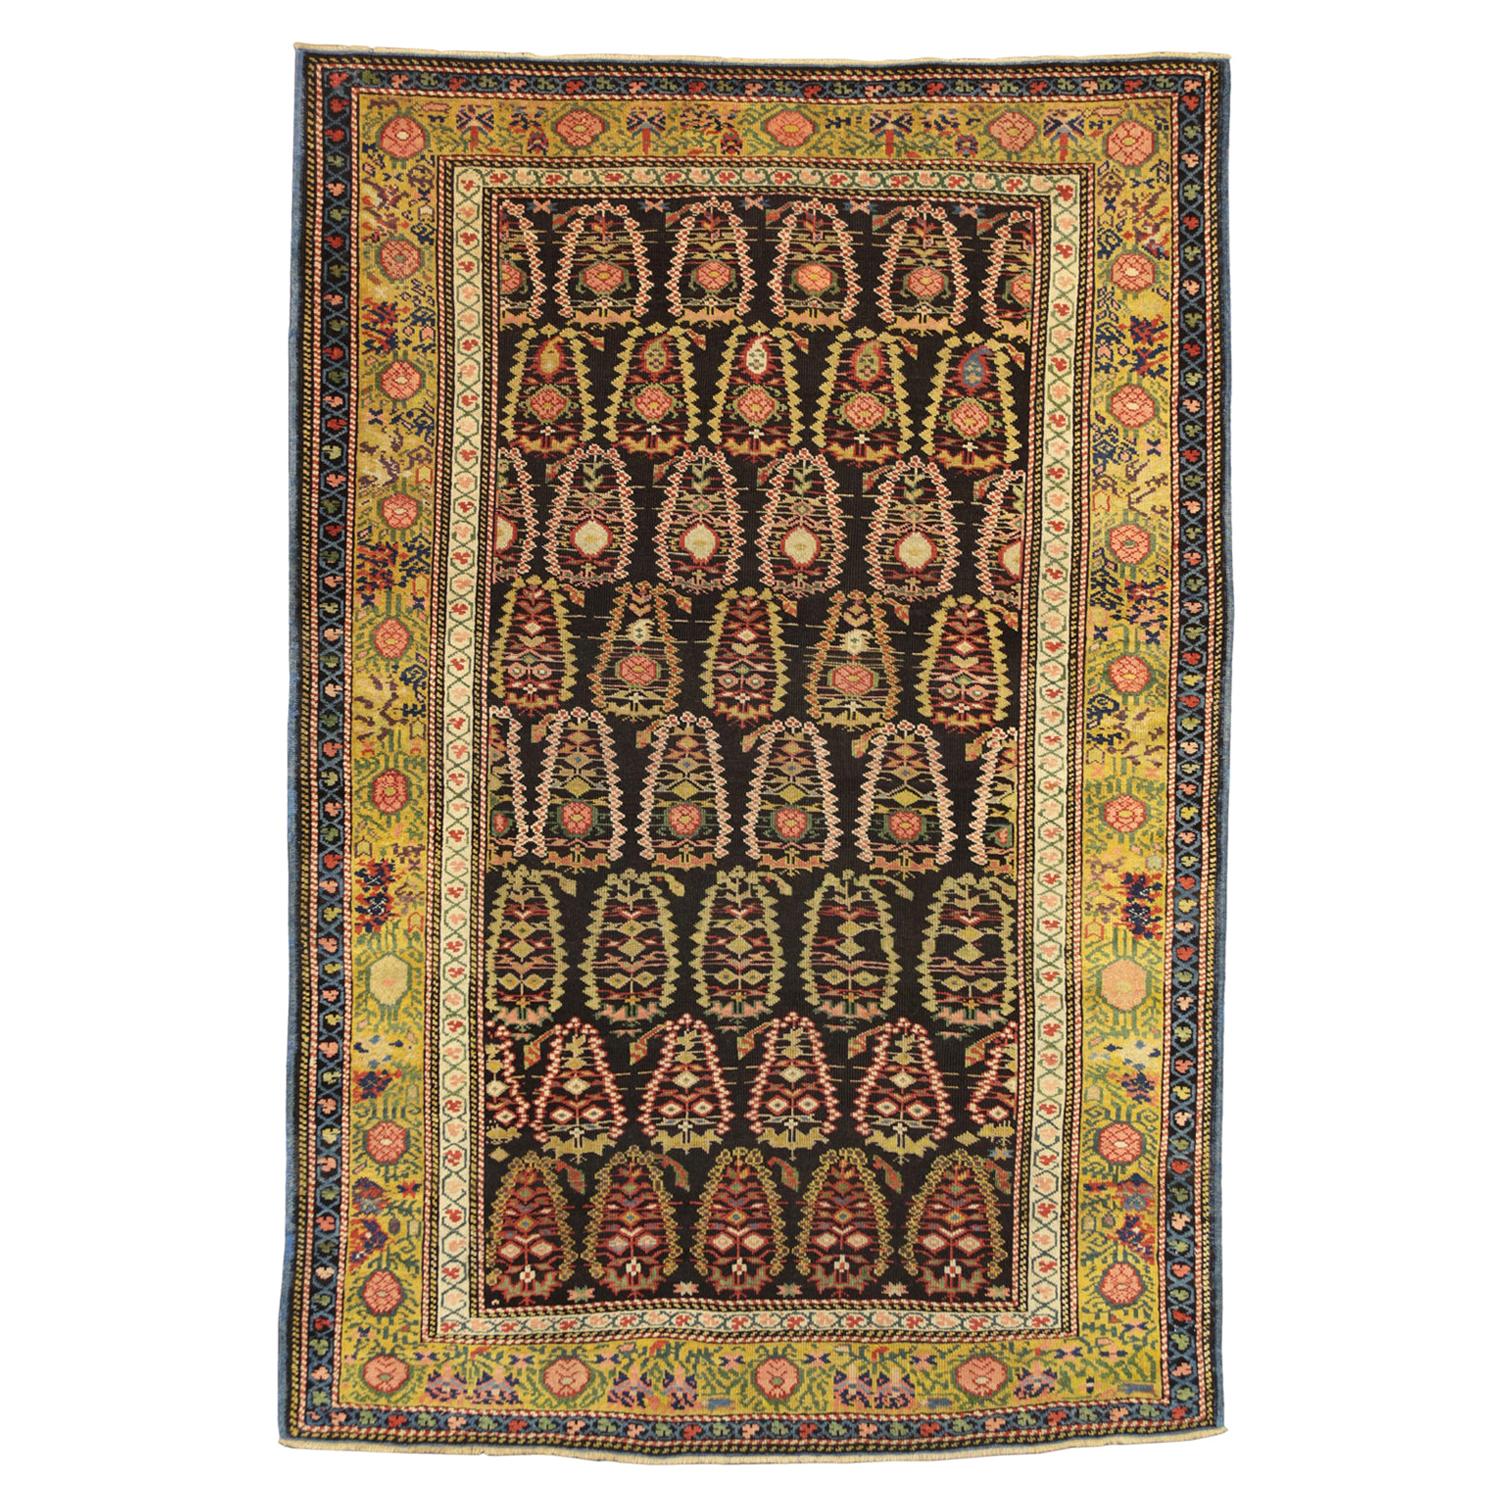 Antique Caucasian Olive Green Border Wool Seychour 'Zeikhur' Rug, 1880-1900 For Sale